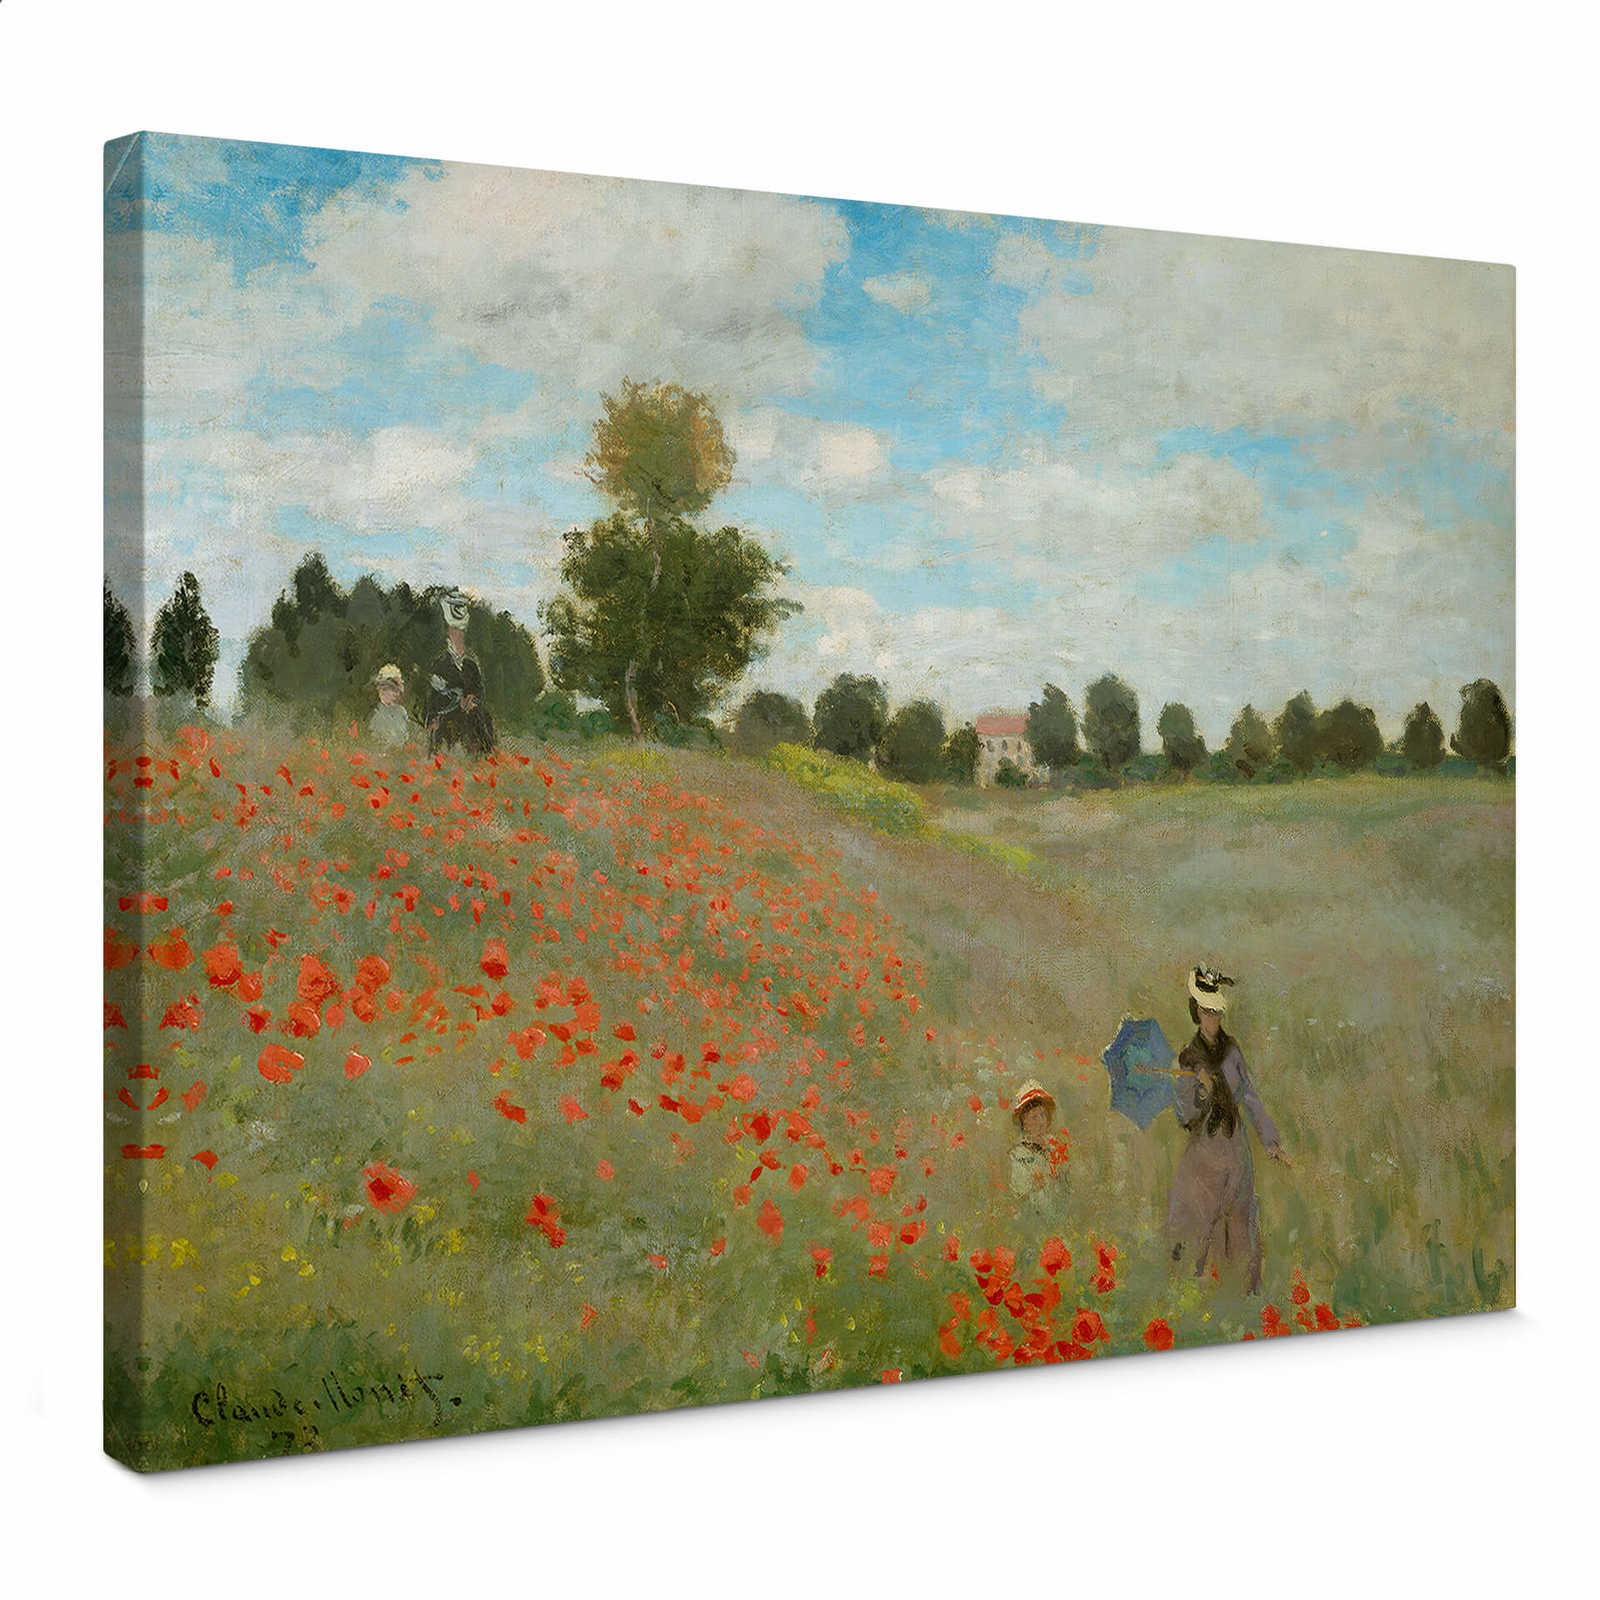 Monet canvas print "Poppy field near argenteuil"
